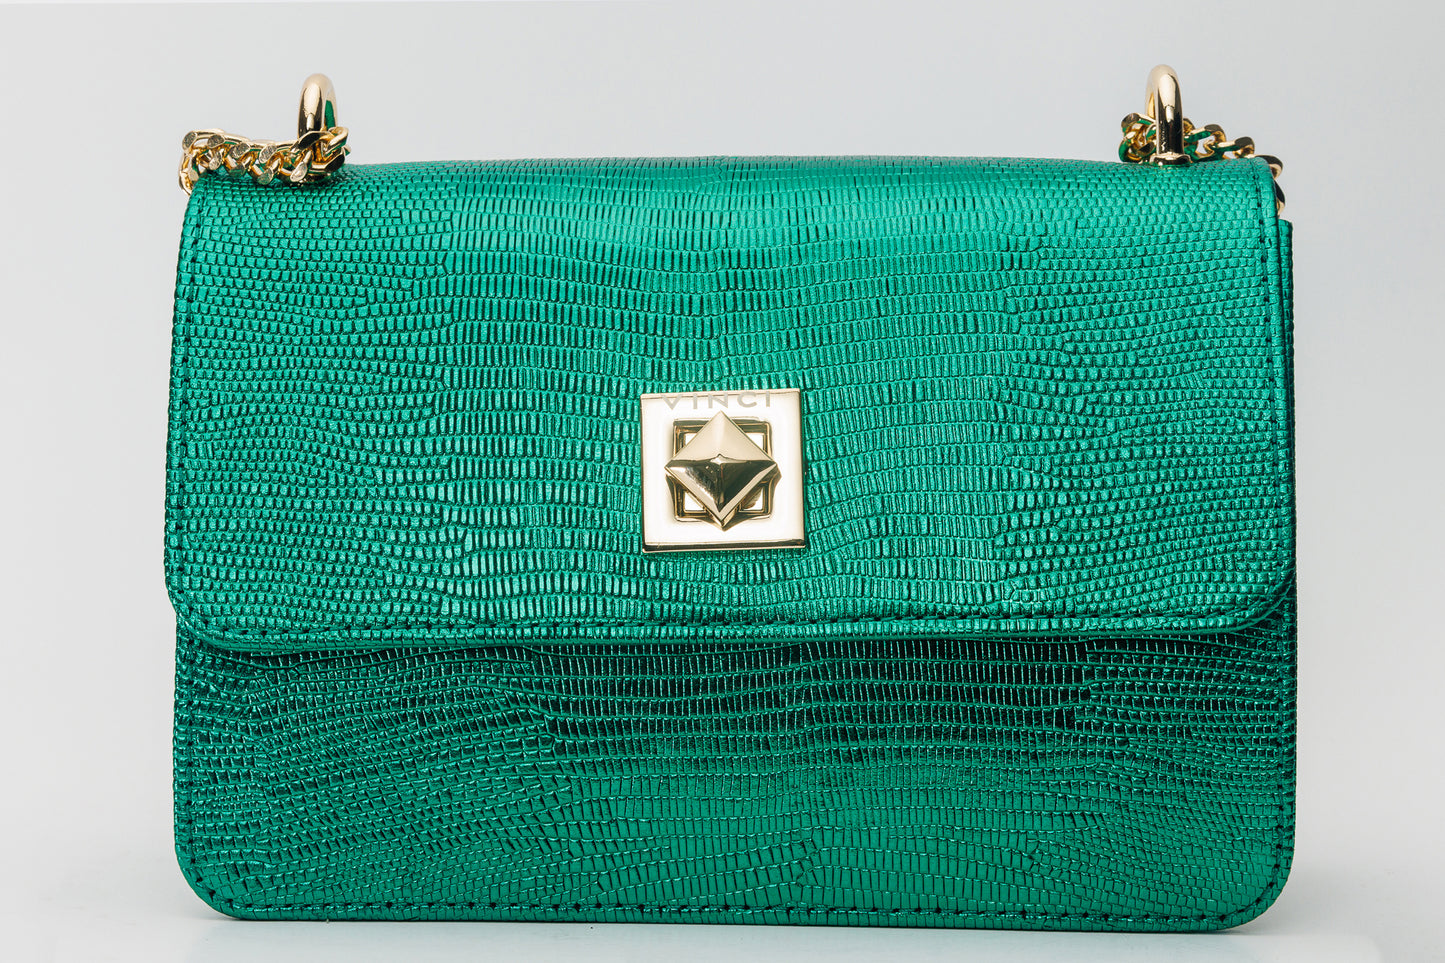 The Maple Green Leather Handbag